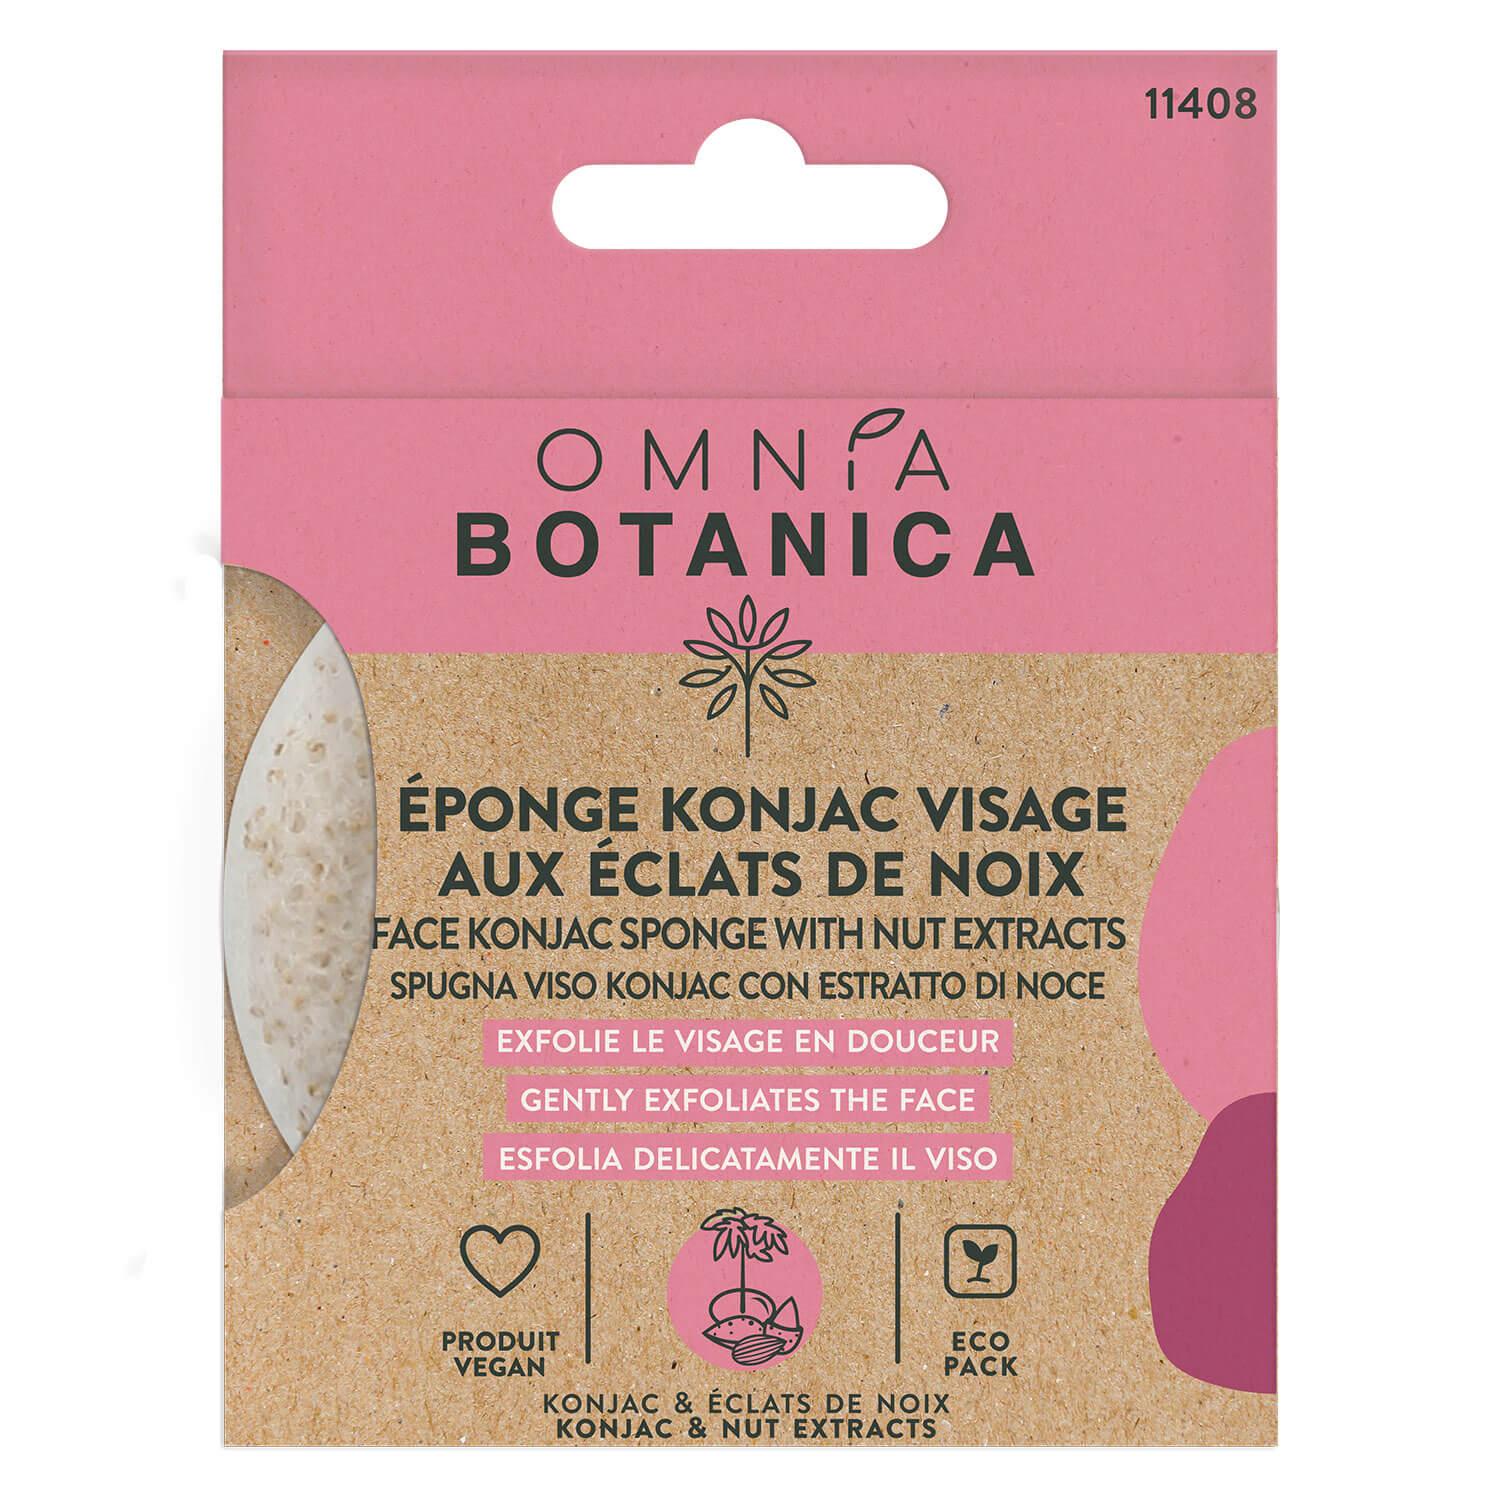 OMNIA BOTANICA - Eponge konjac visage noix